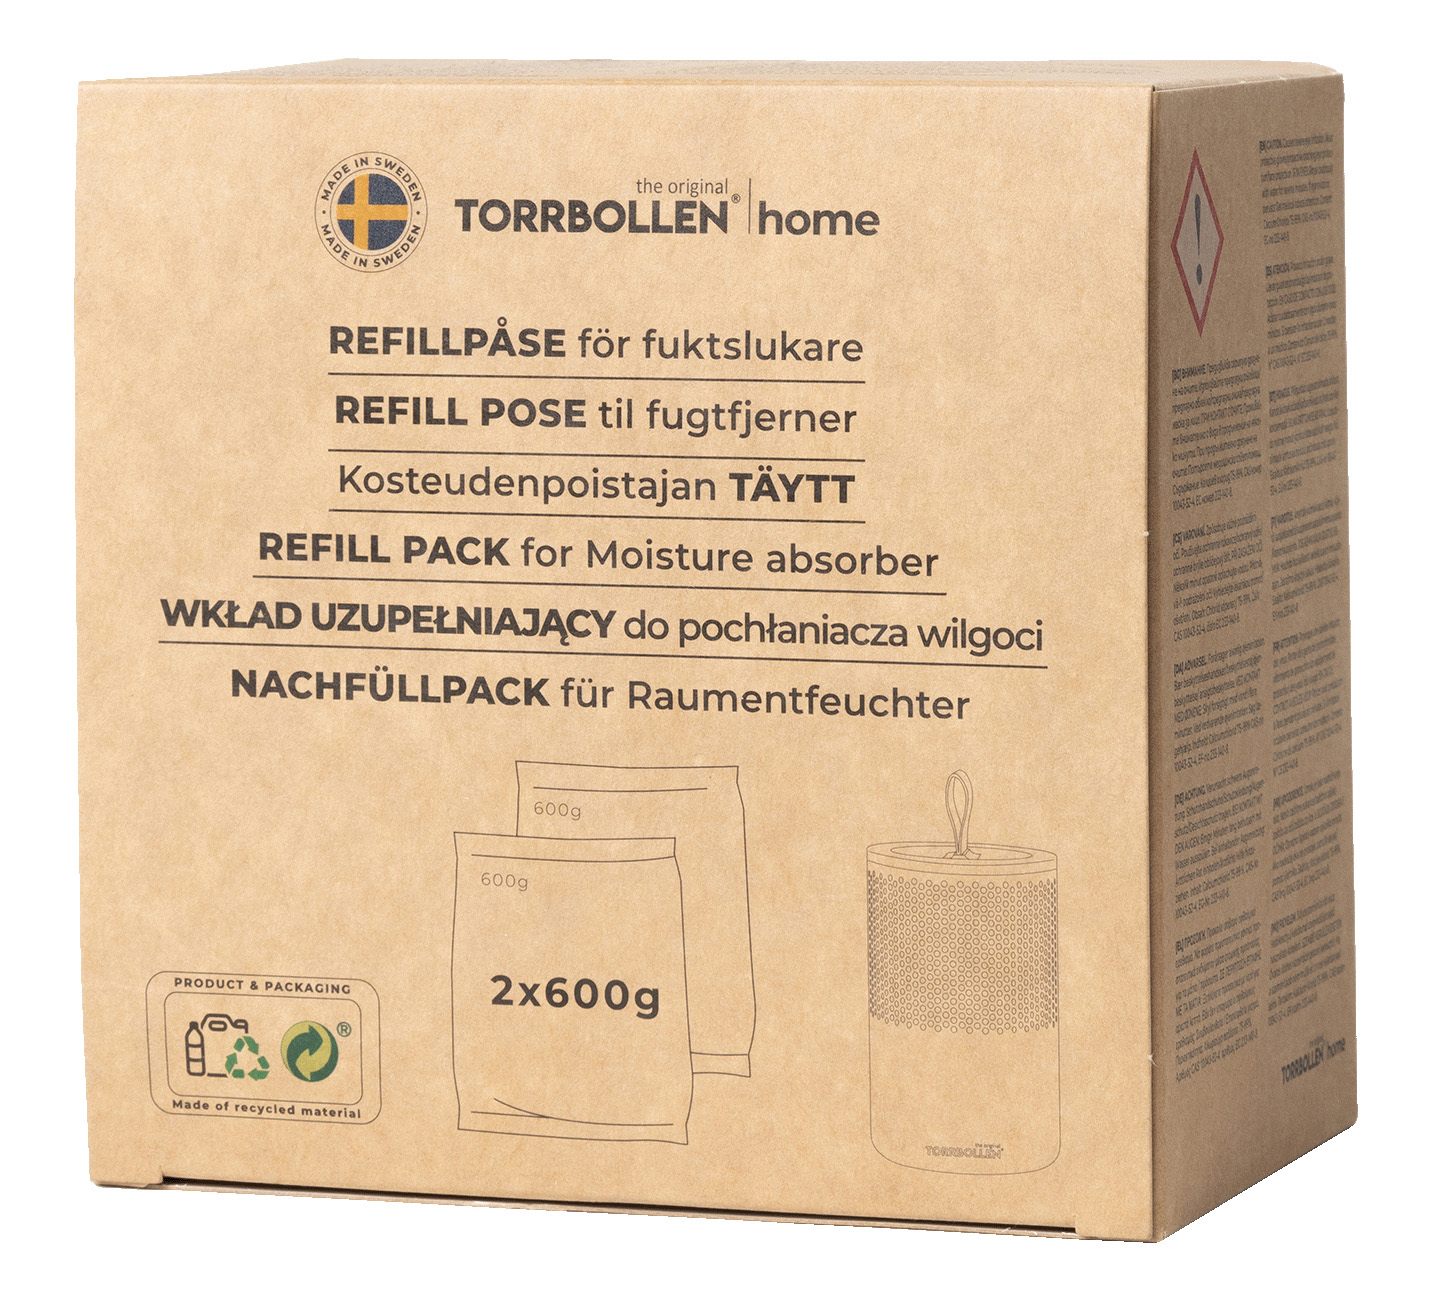 [8565097] Torrbollen Home refill 2-pack